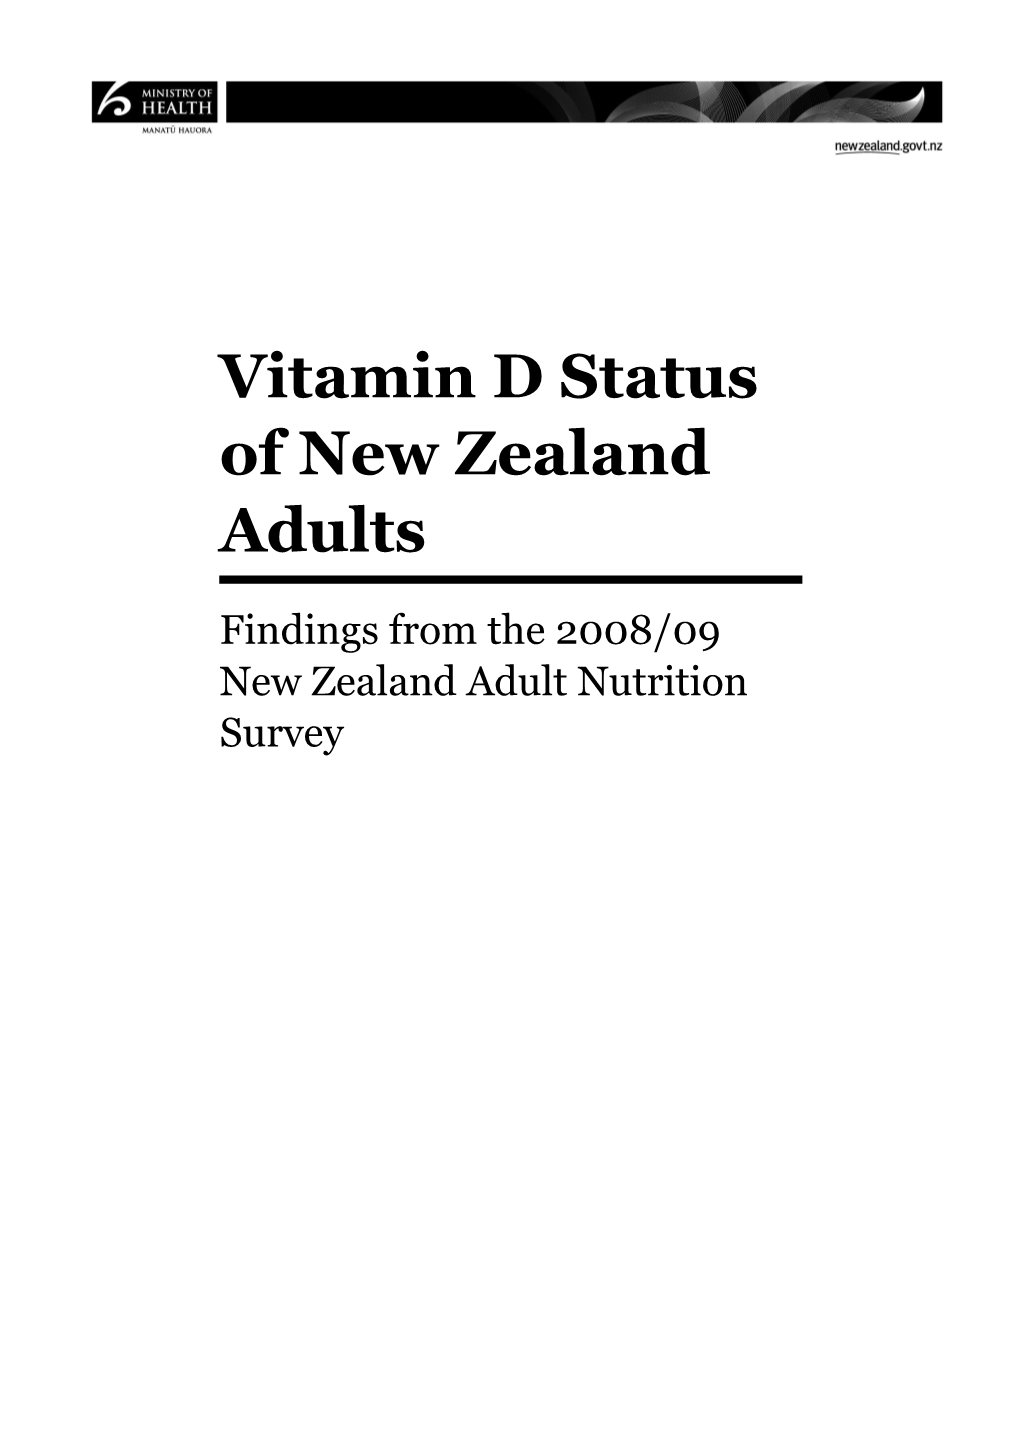 Vitamin D Status of New Zealand Adults